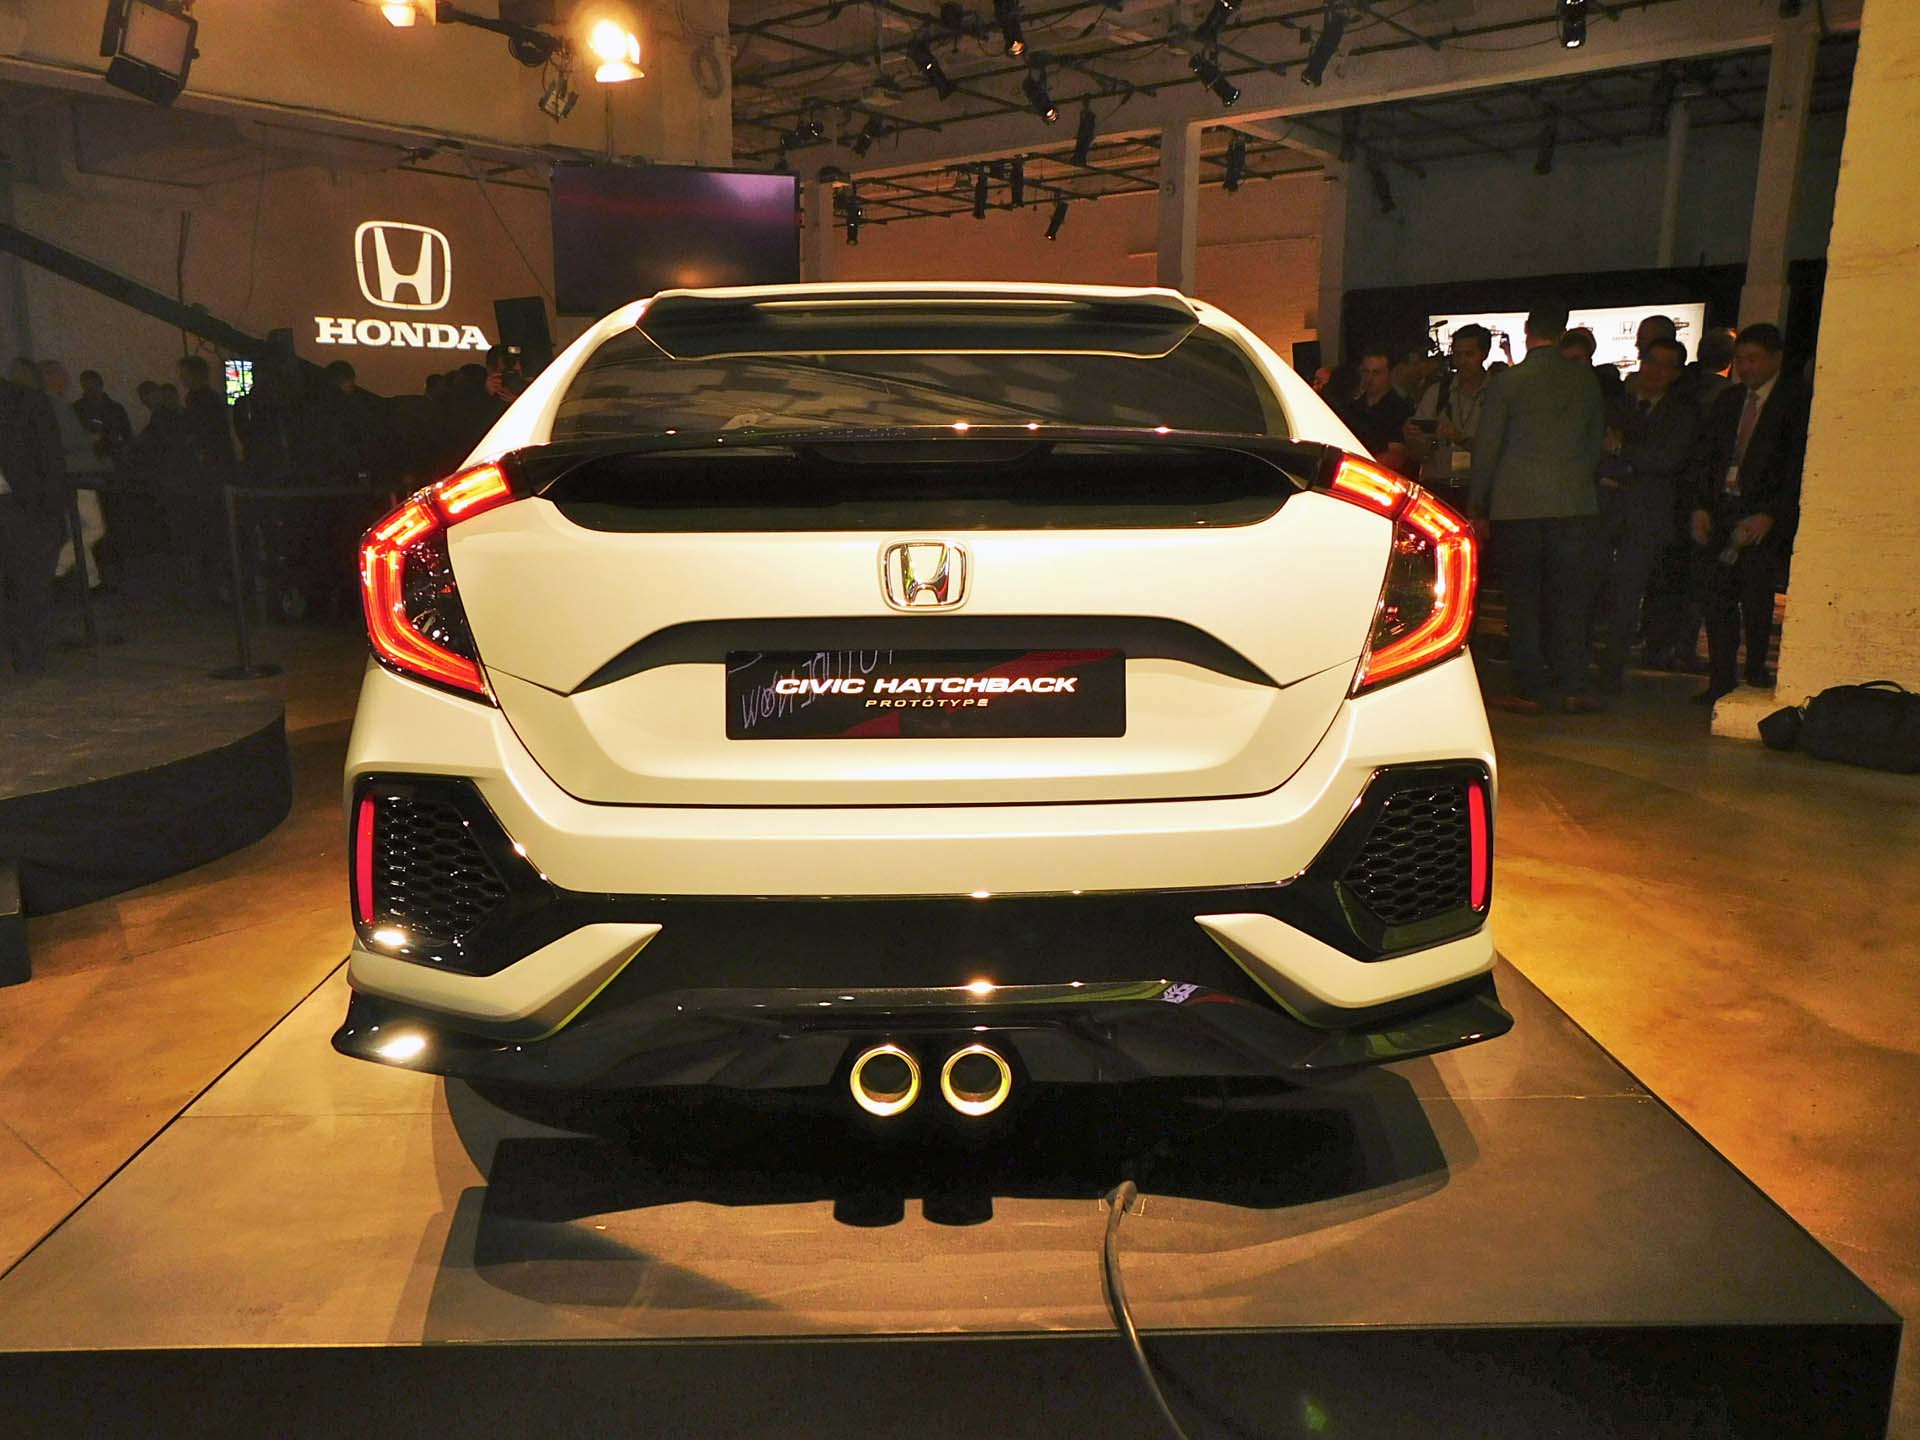 2016 Honda Civic Hatchback Prototype